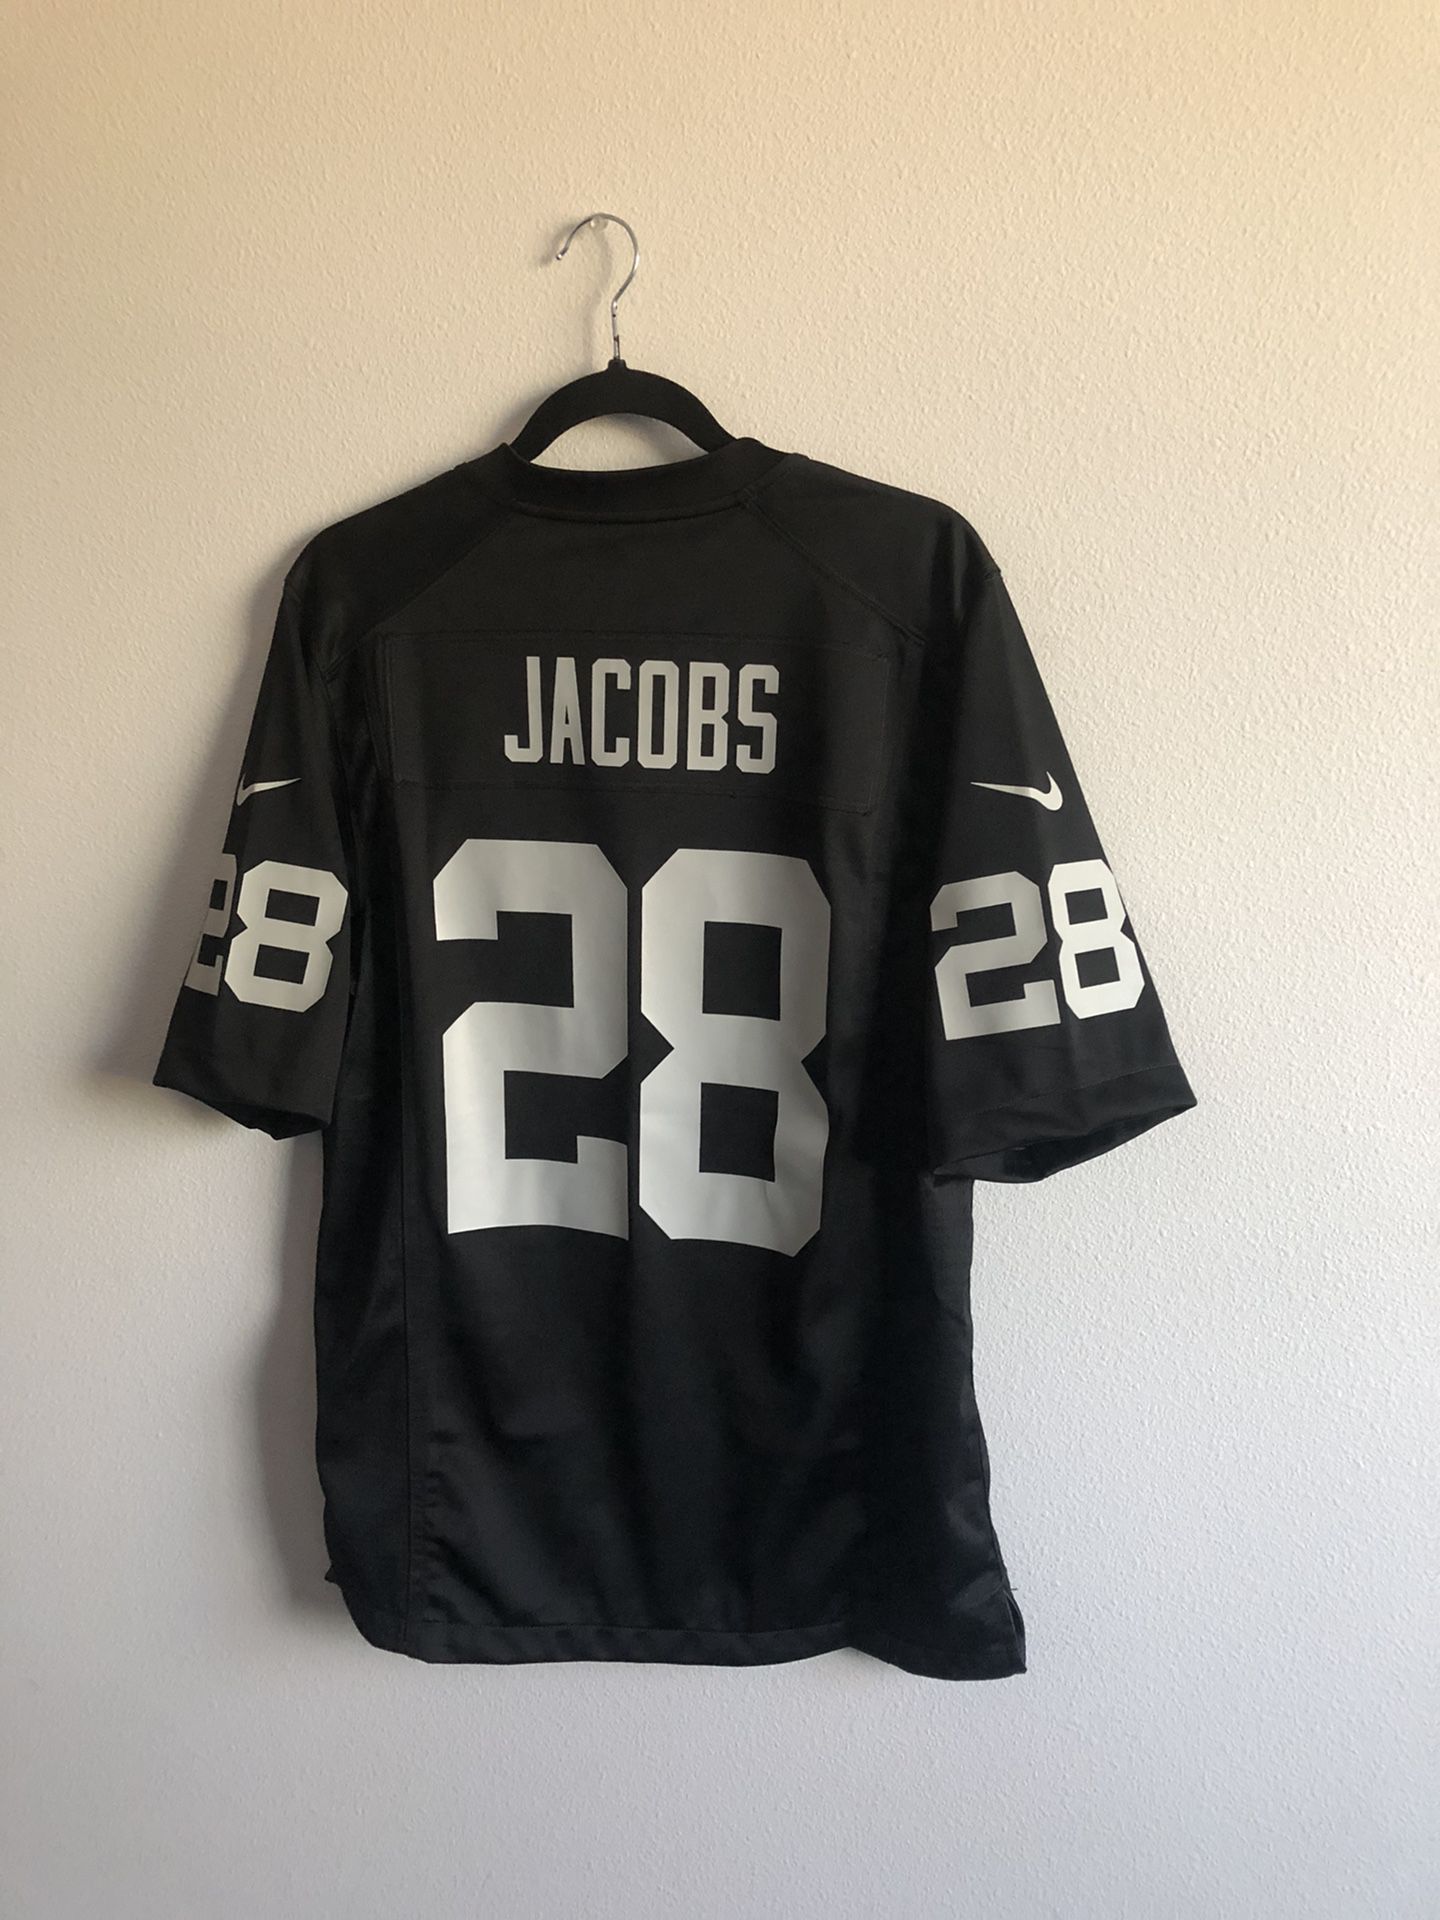 Raiders Josh Jacobs Jersey 